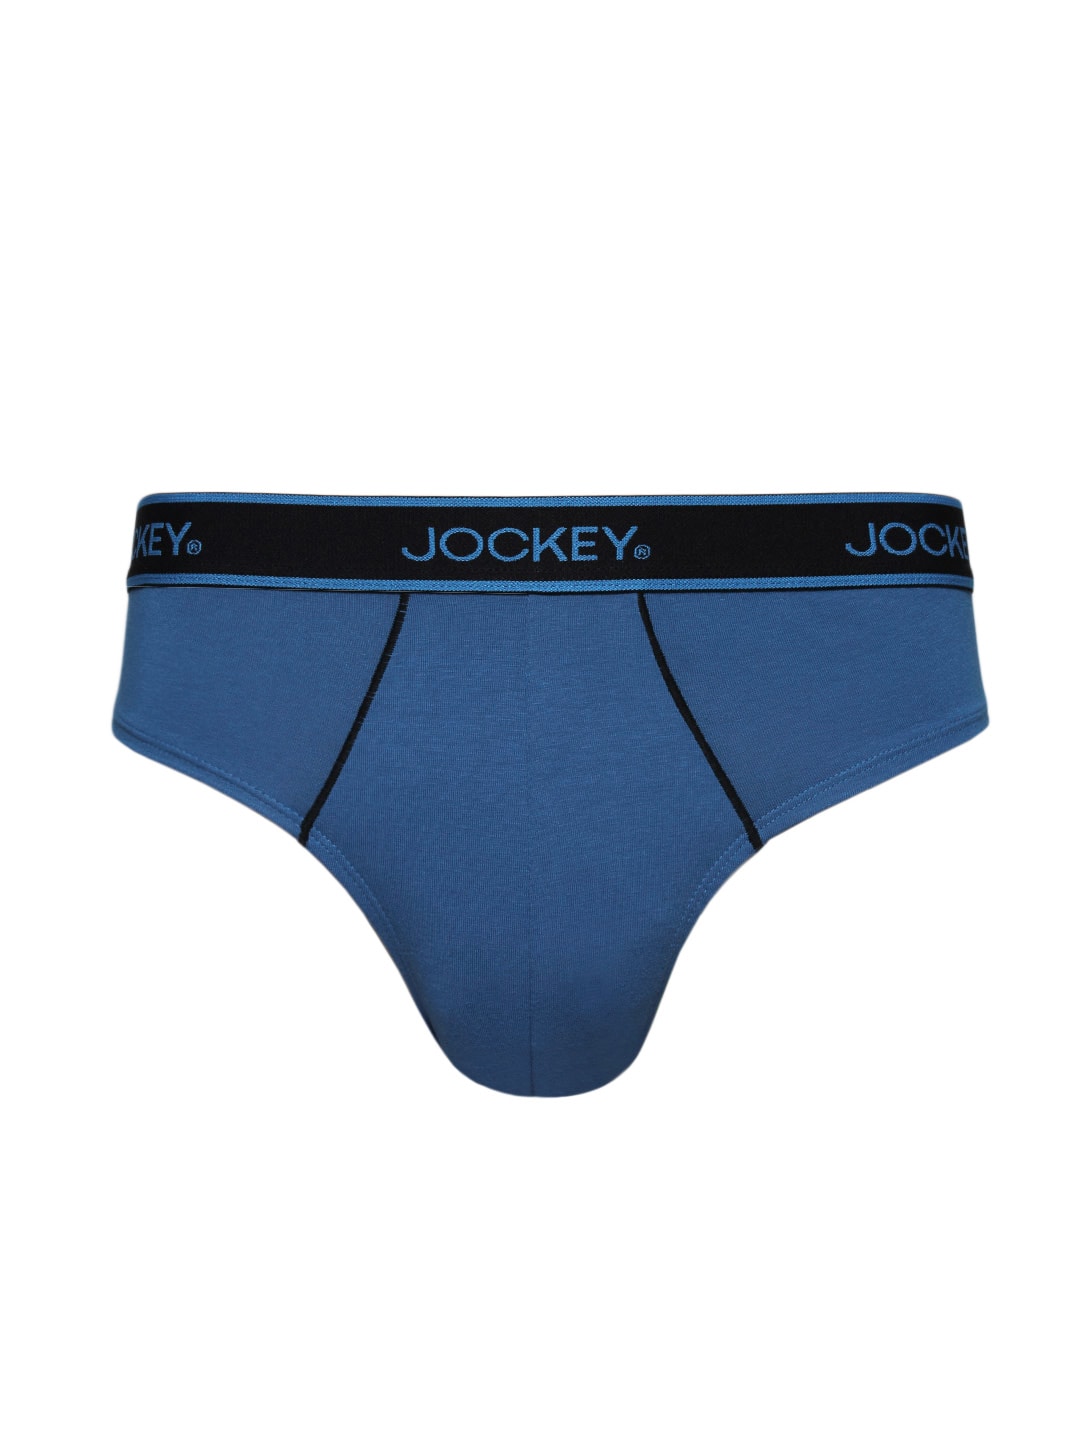 Jockey Men Comfort Stretch Blue Bikini Brief